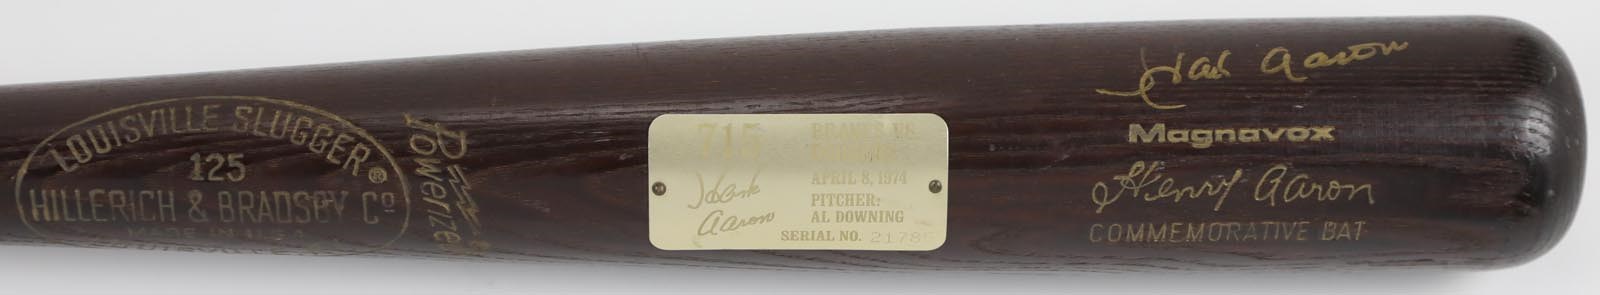 Baseball Autographs - 1974 Magnavox Commemorative 715 Home Run Bat Signed by Hank Aaron